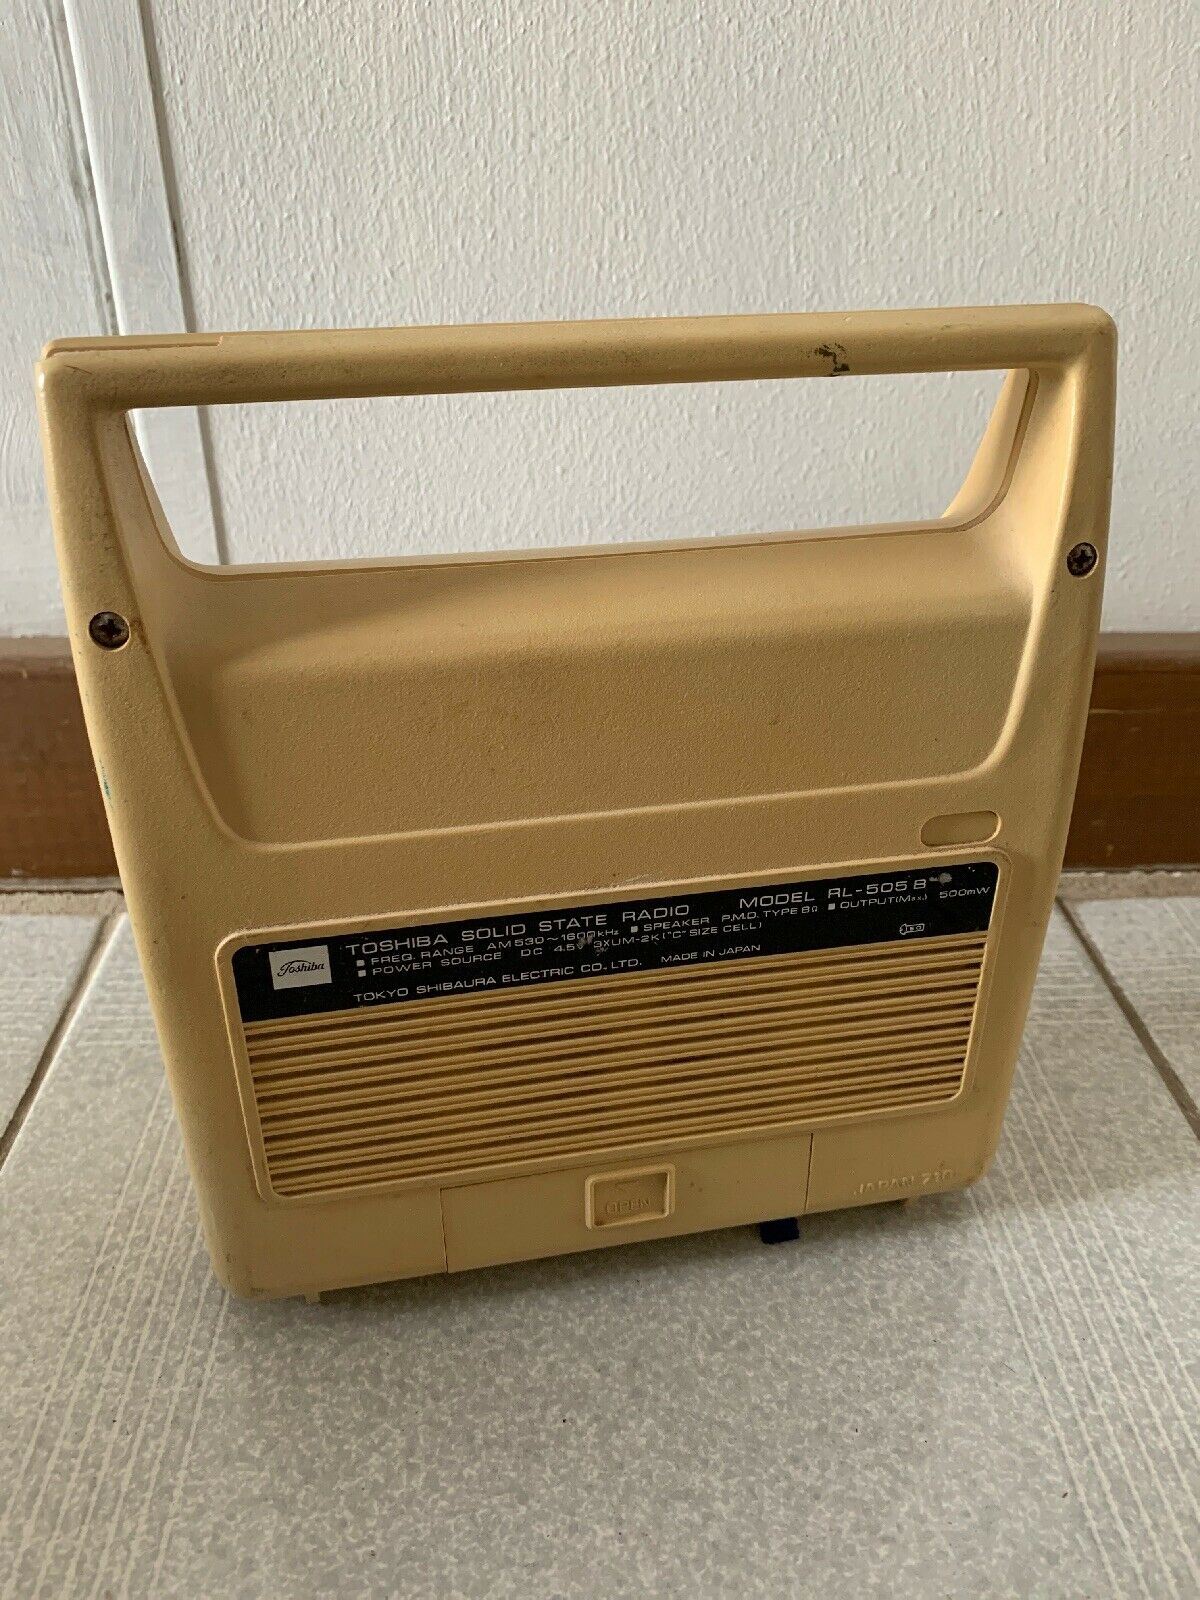 Toshiba Solid State Radio RL-505 B Vintage AM Radio